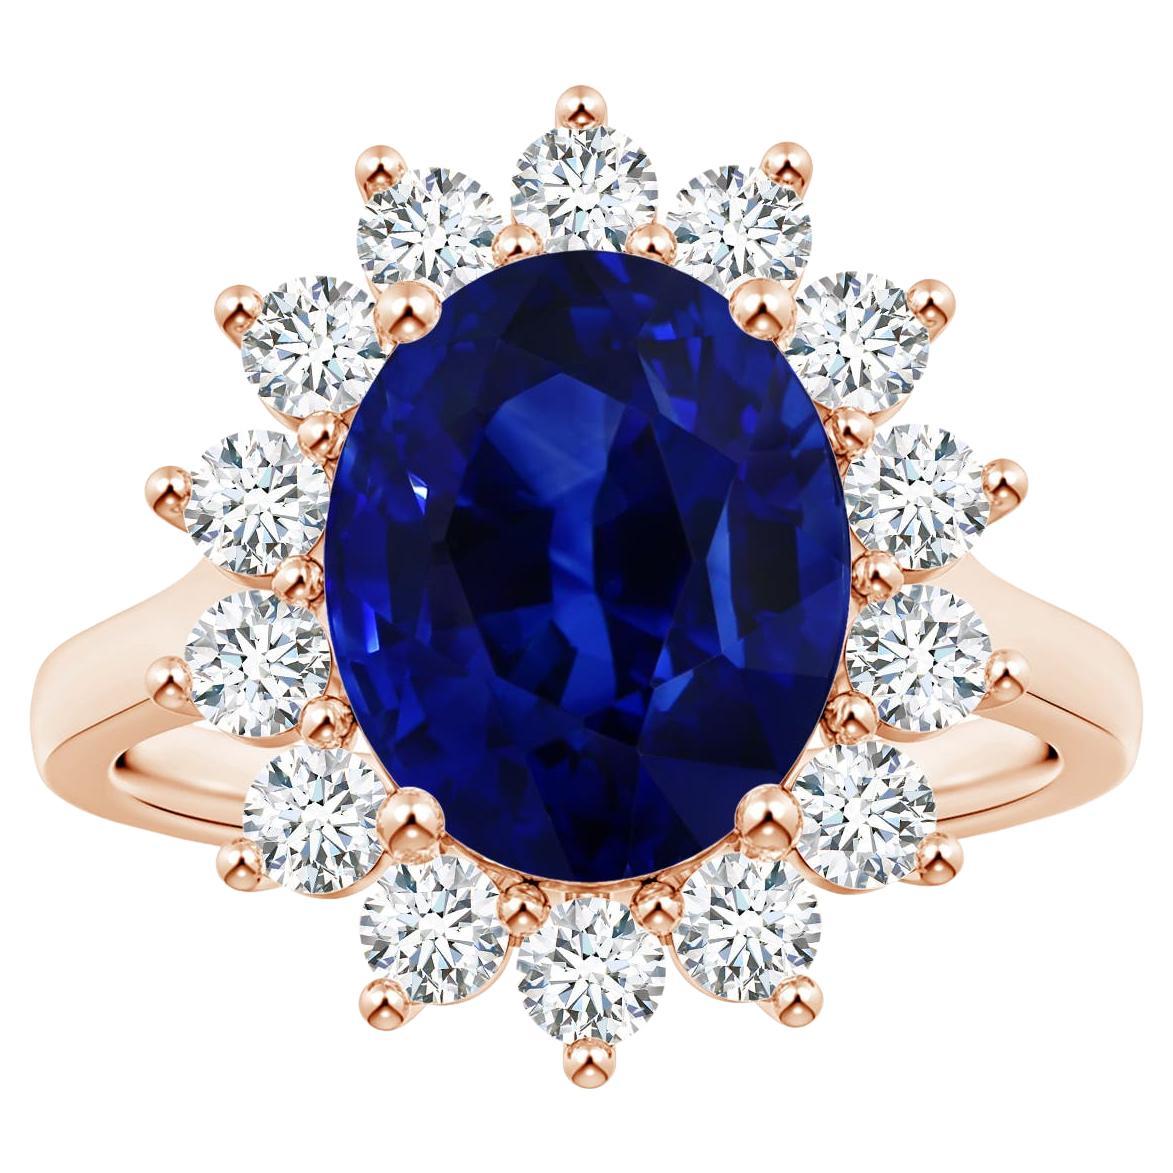 Im Angebot: ANGARA Prinzessin Diana inspirierter GIA-zertifizierter blauer Saphir Halo Roségold Ring ()